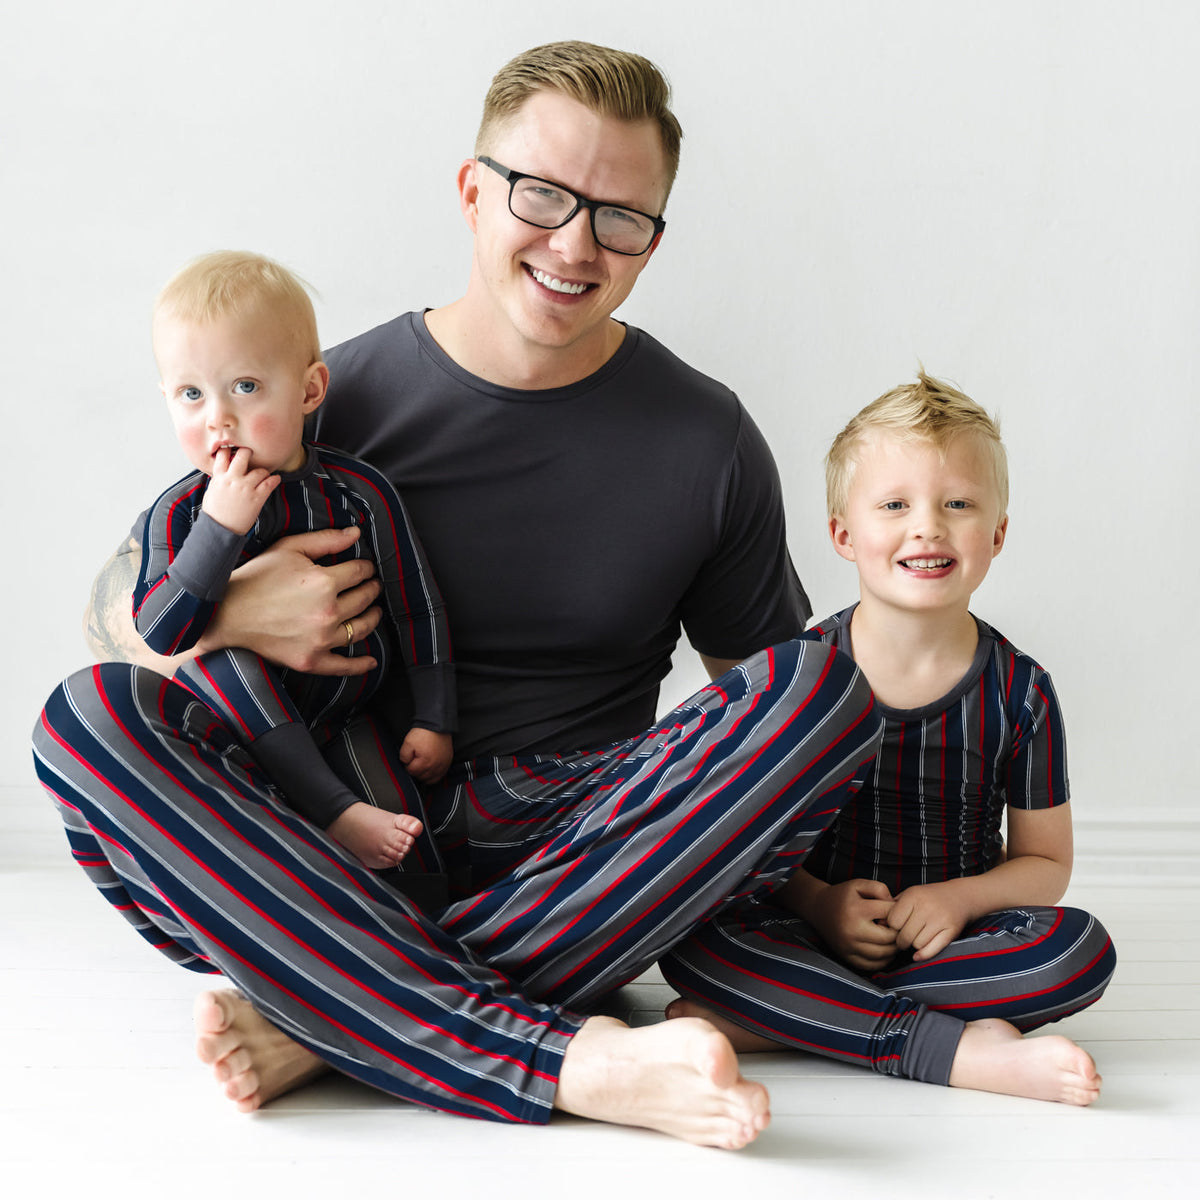 Suited Stripe Men's Bamboo Viscose Pajama Pants - Little Sleepies